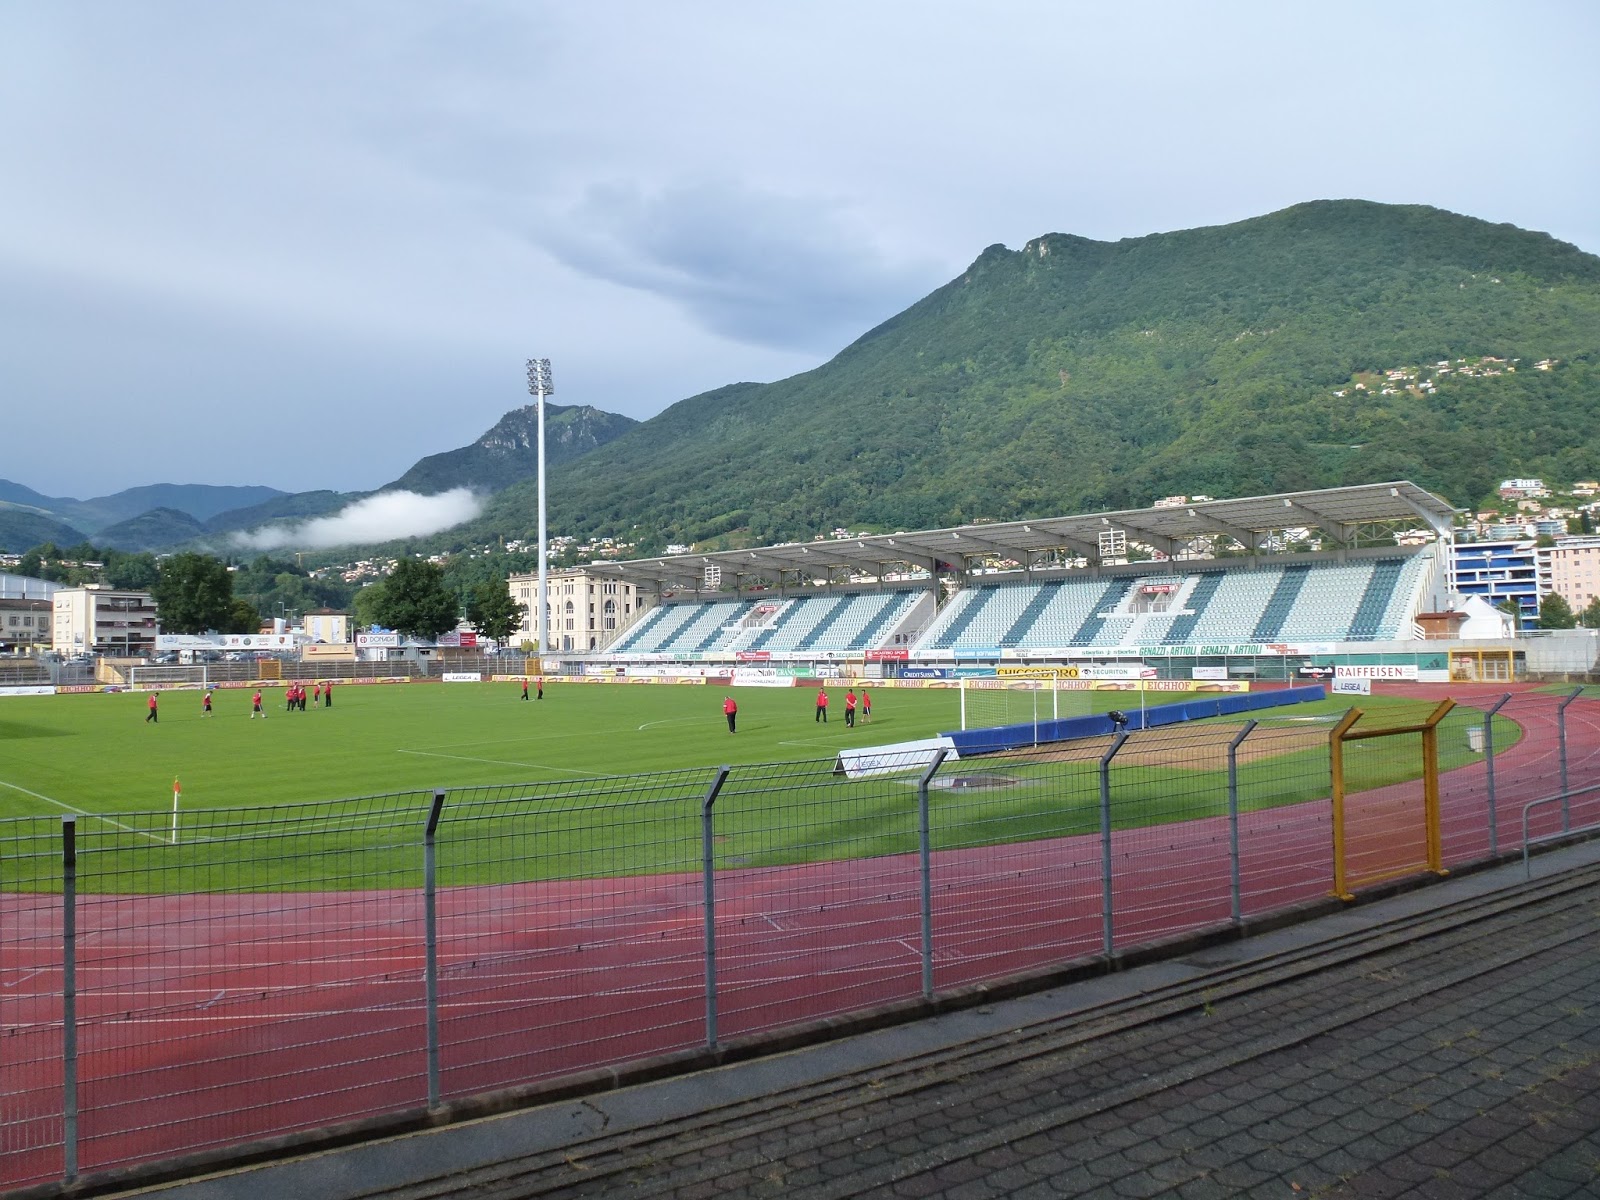 Football Club Lugano, Lugano - Things to do in Ticino